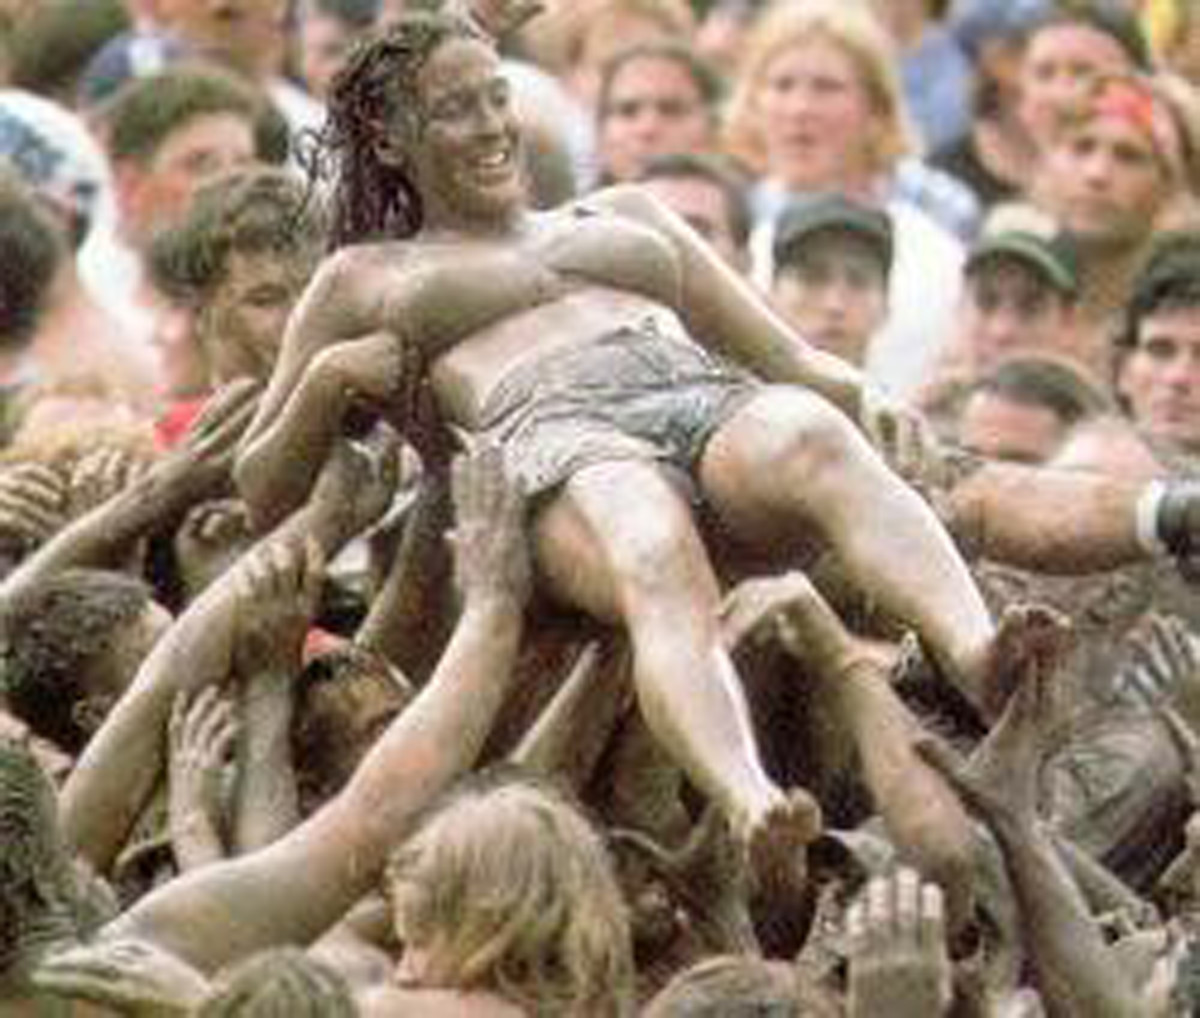 Rain and fun in the mud during Woodstock